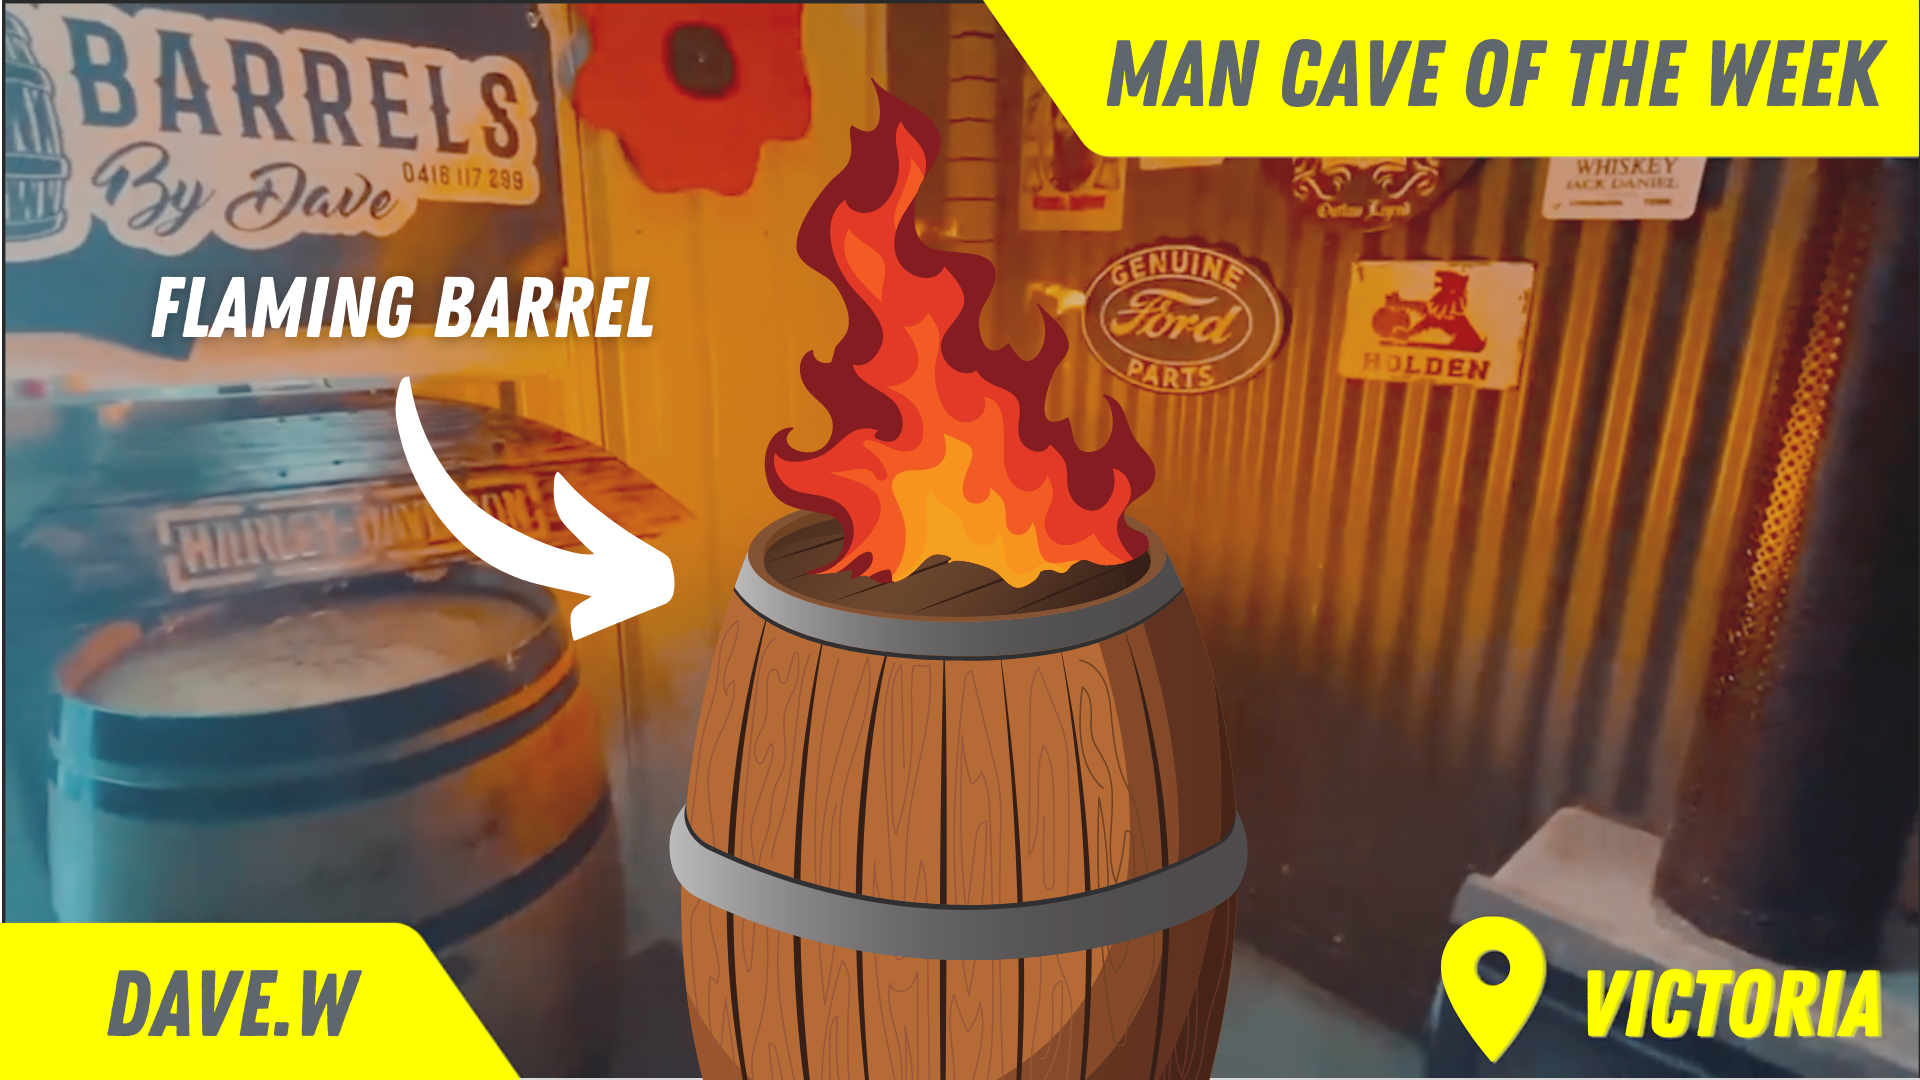 Man Cave of The Week Episode 2 - Flaming Barrels